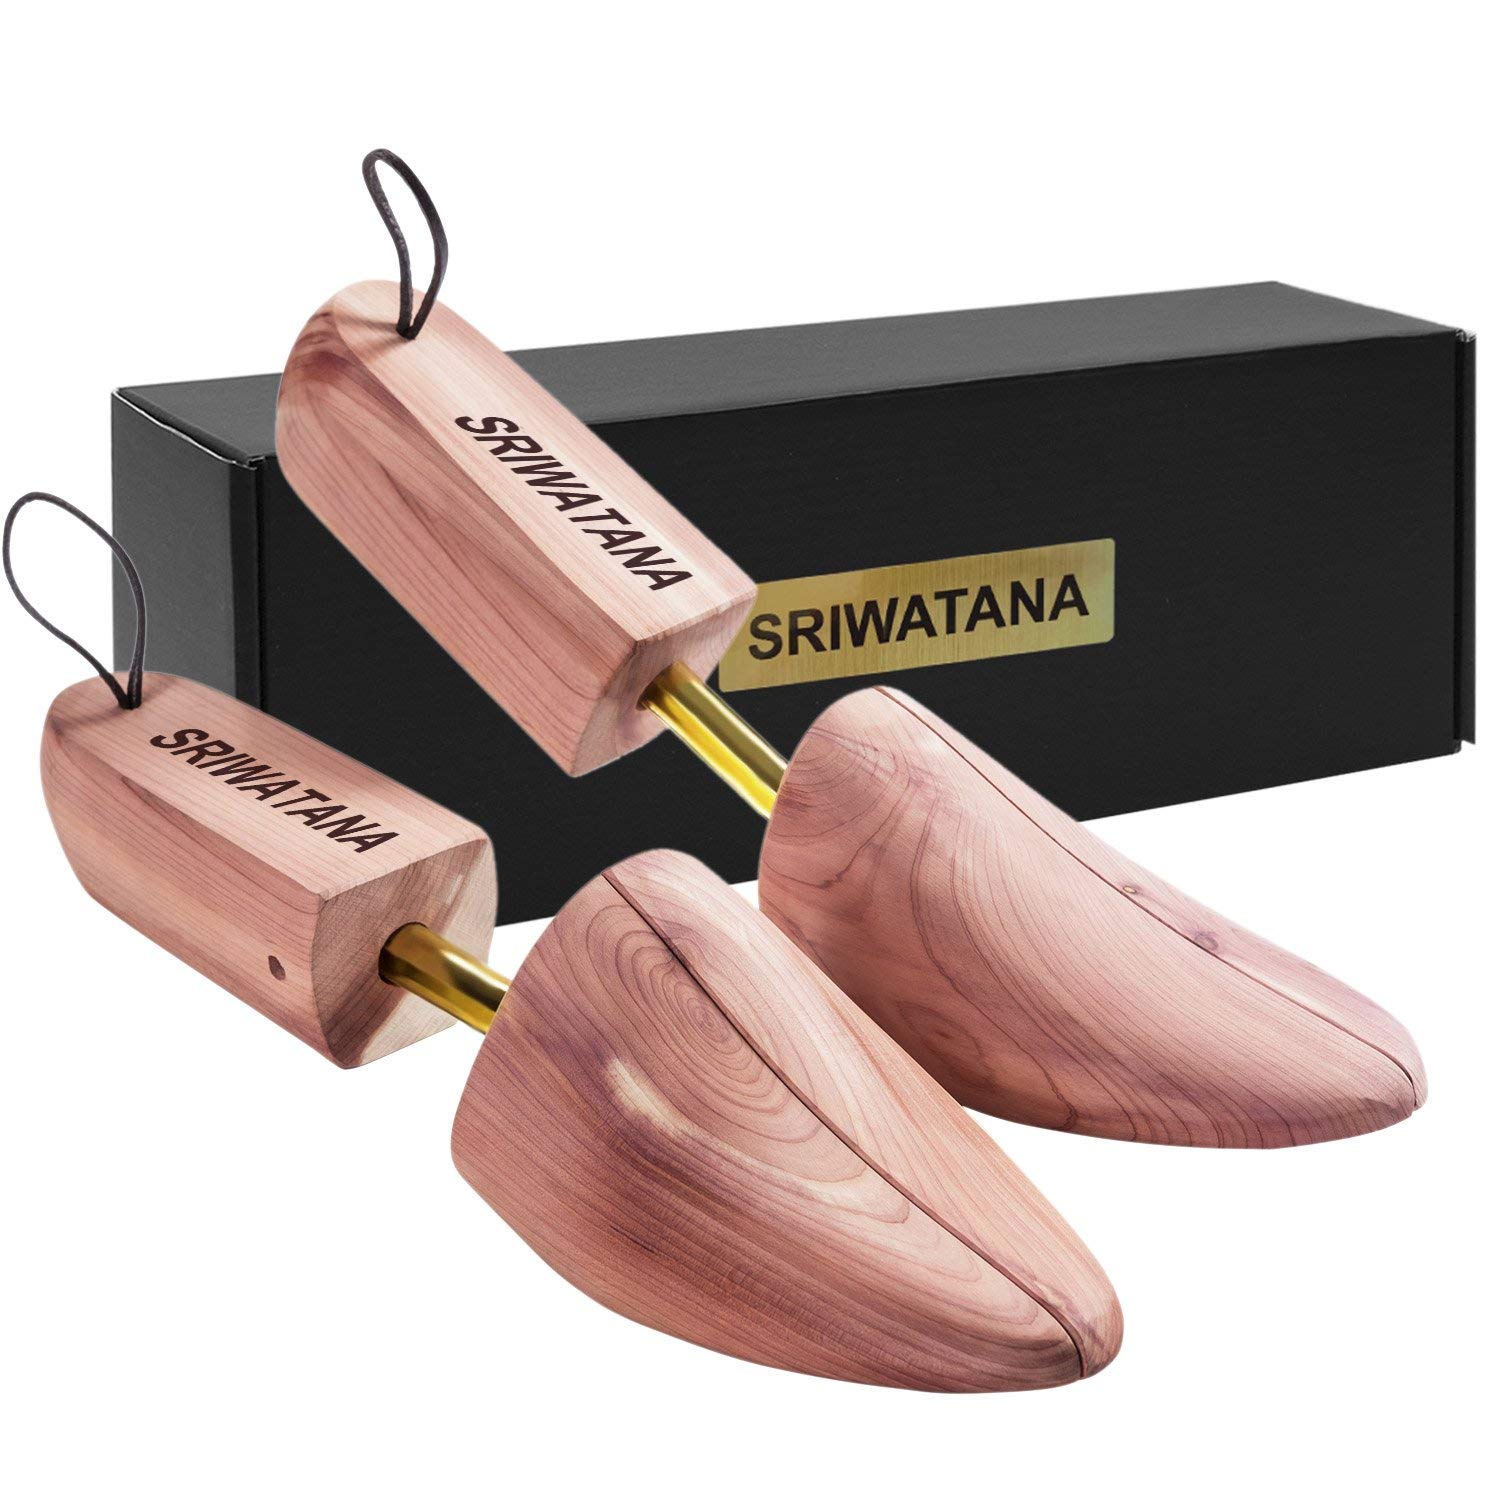 SRIWATANA Men's Cedar Shoe Trees Stretcher Length and Width- Fit US Size 10-13 - Self-ajustable Shoe Keeper/Shaper